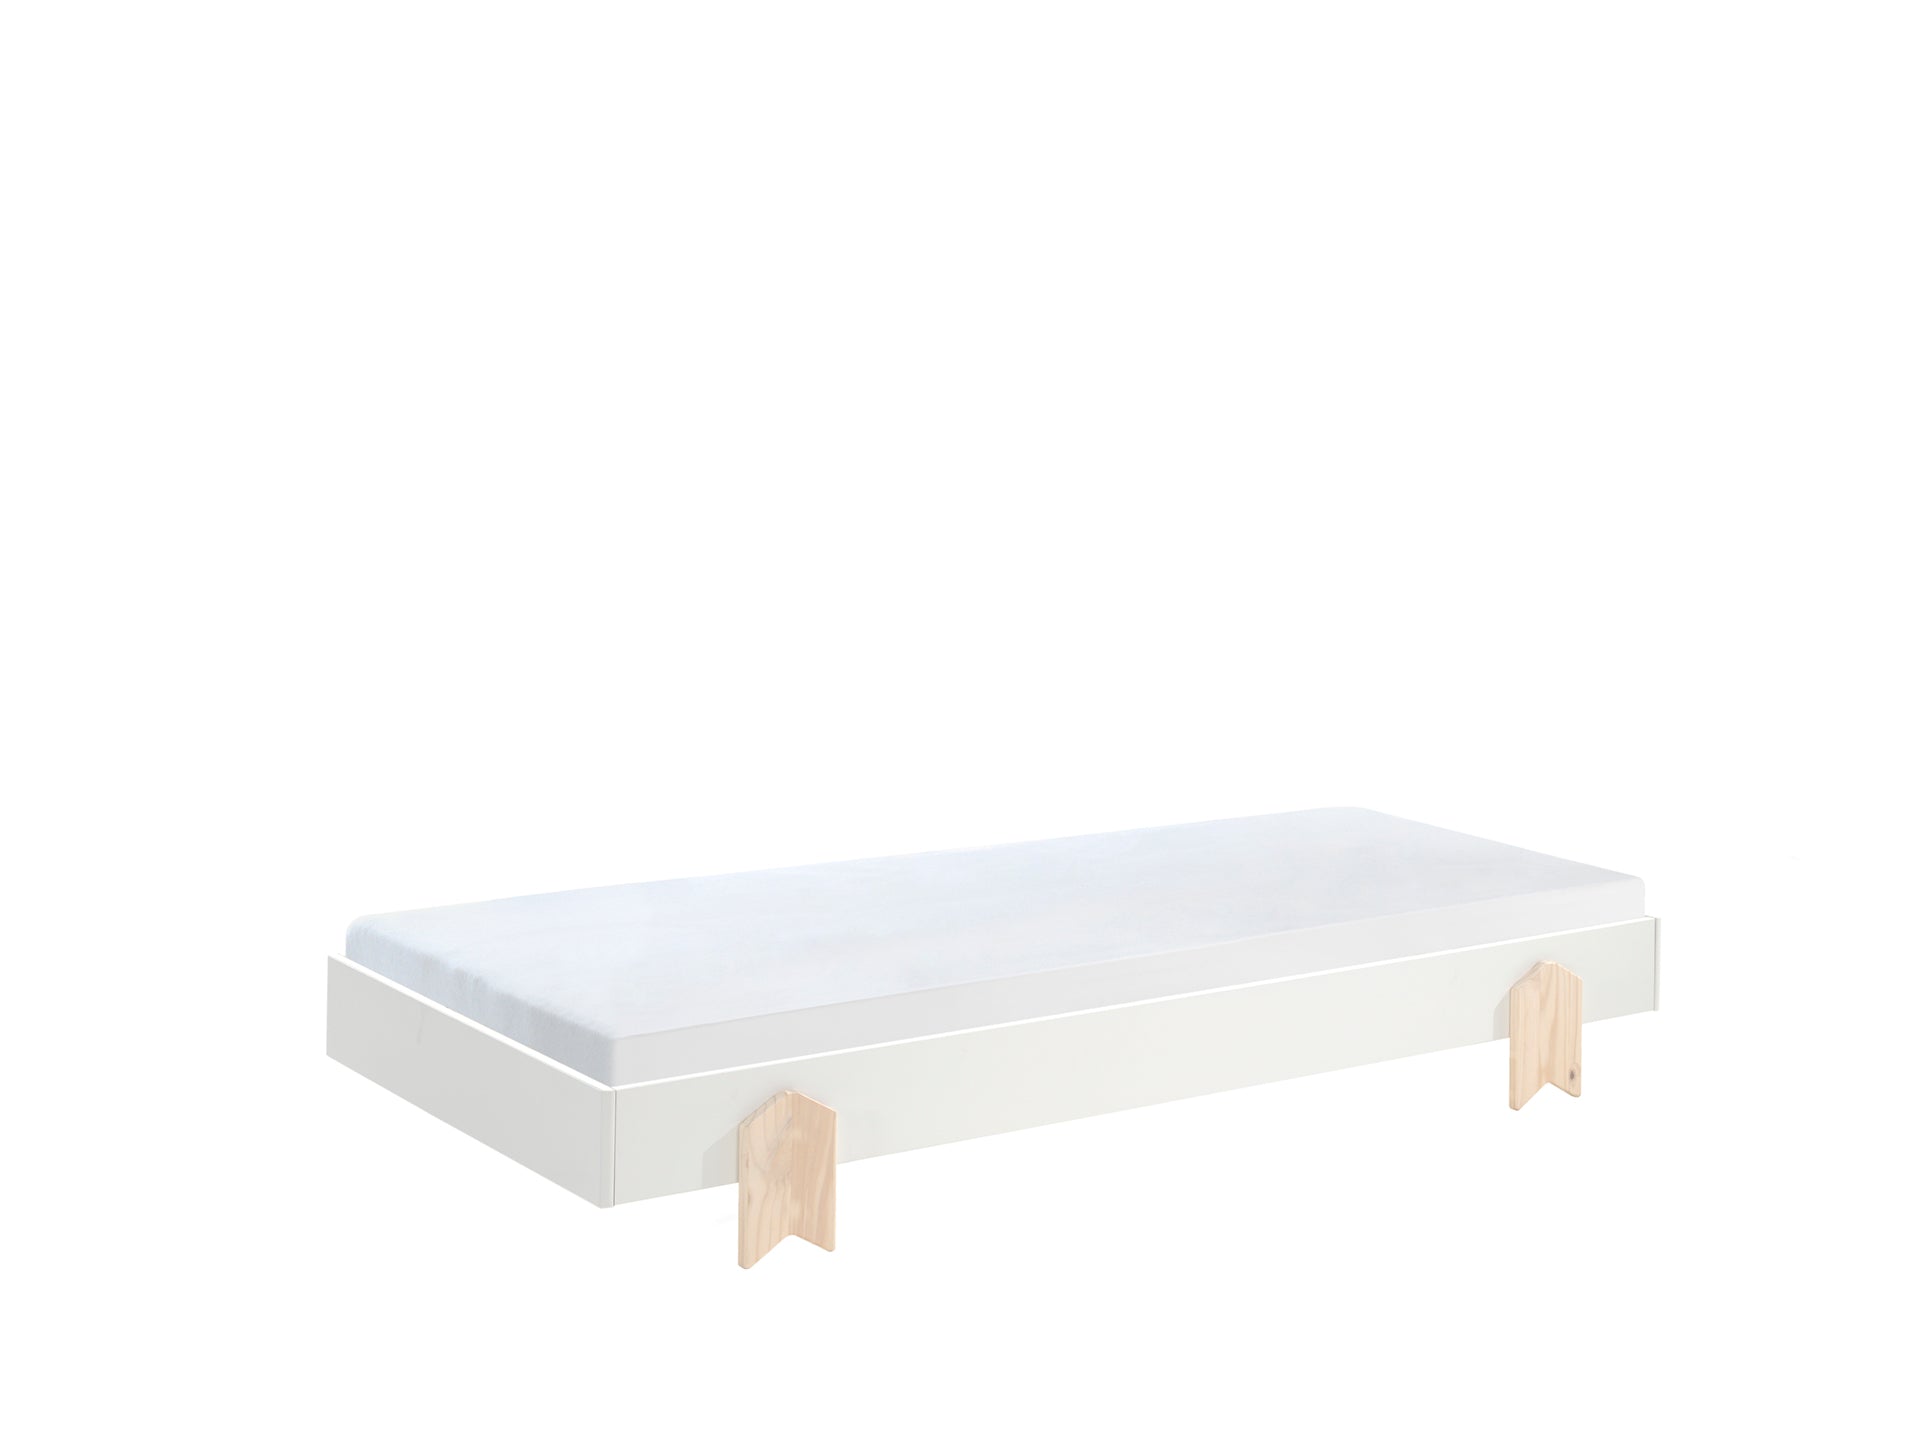 Vipack Modulo Arrow Kids Single Stacker Bed - White